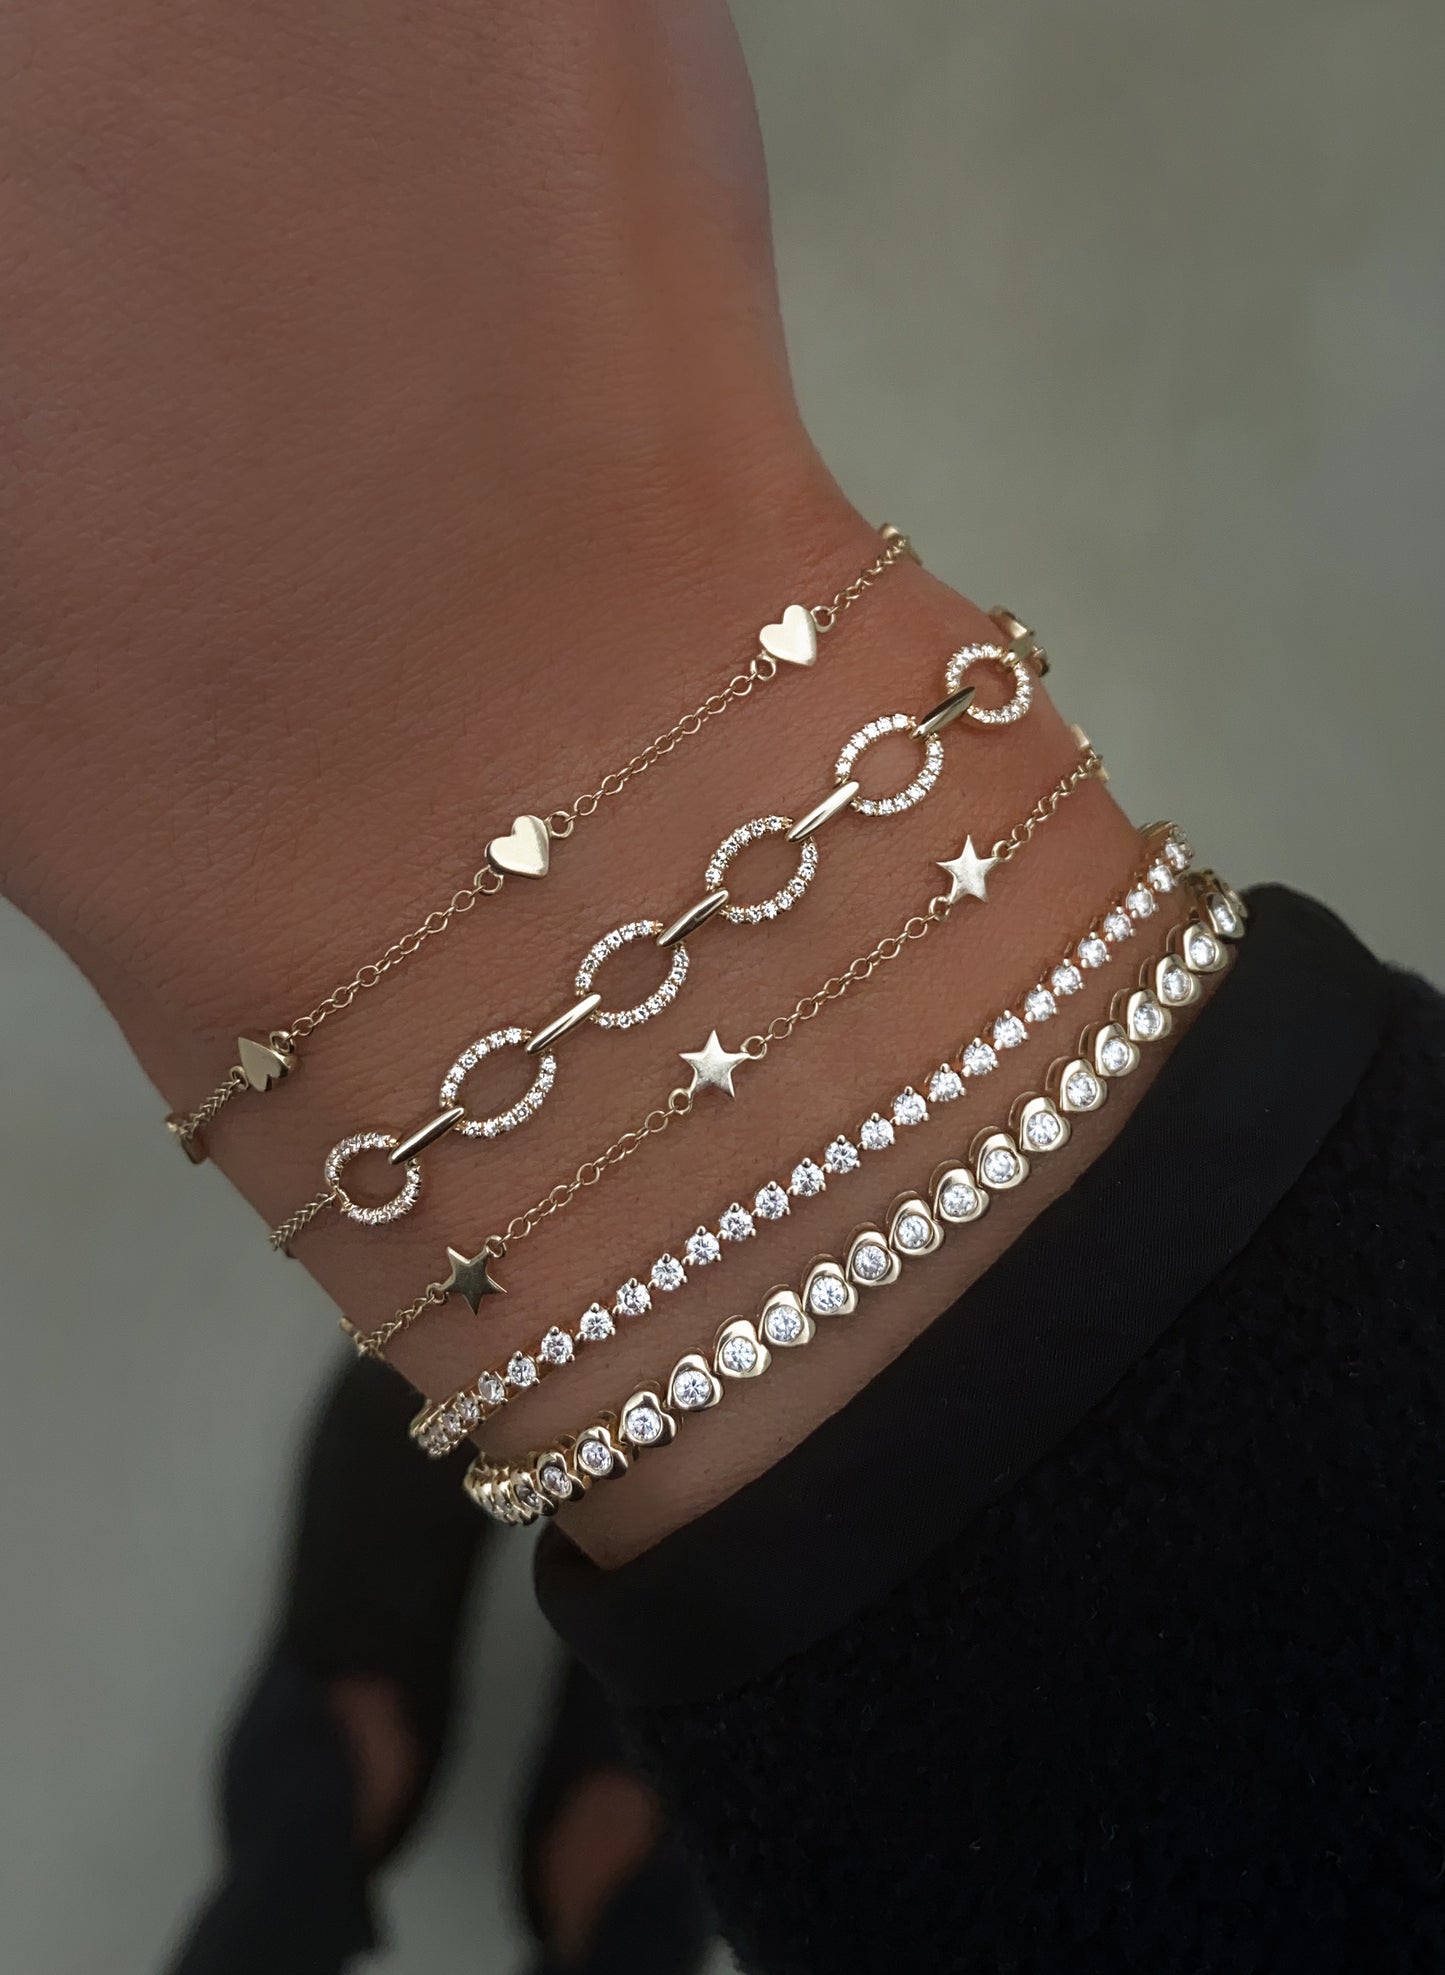 14kt gold and diamond mini prong tennis bracelet